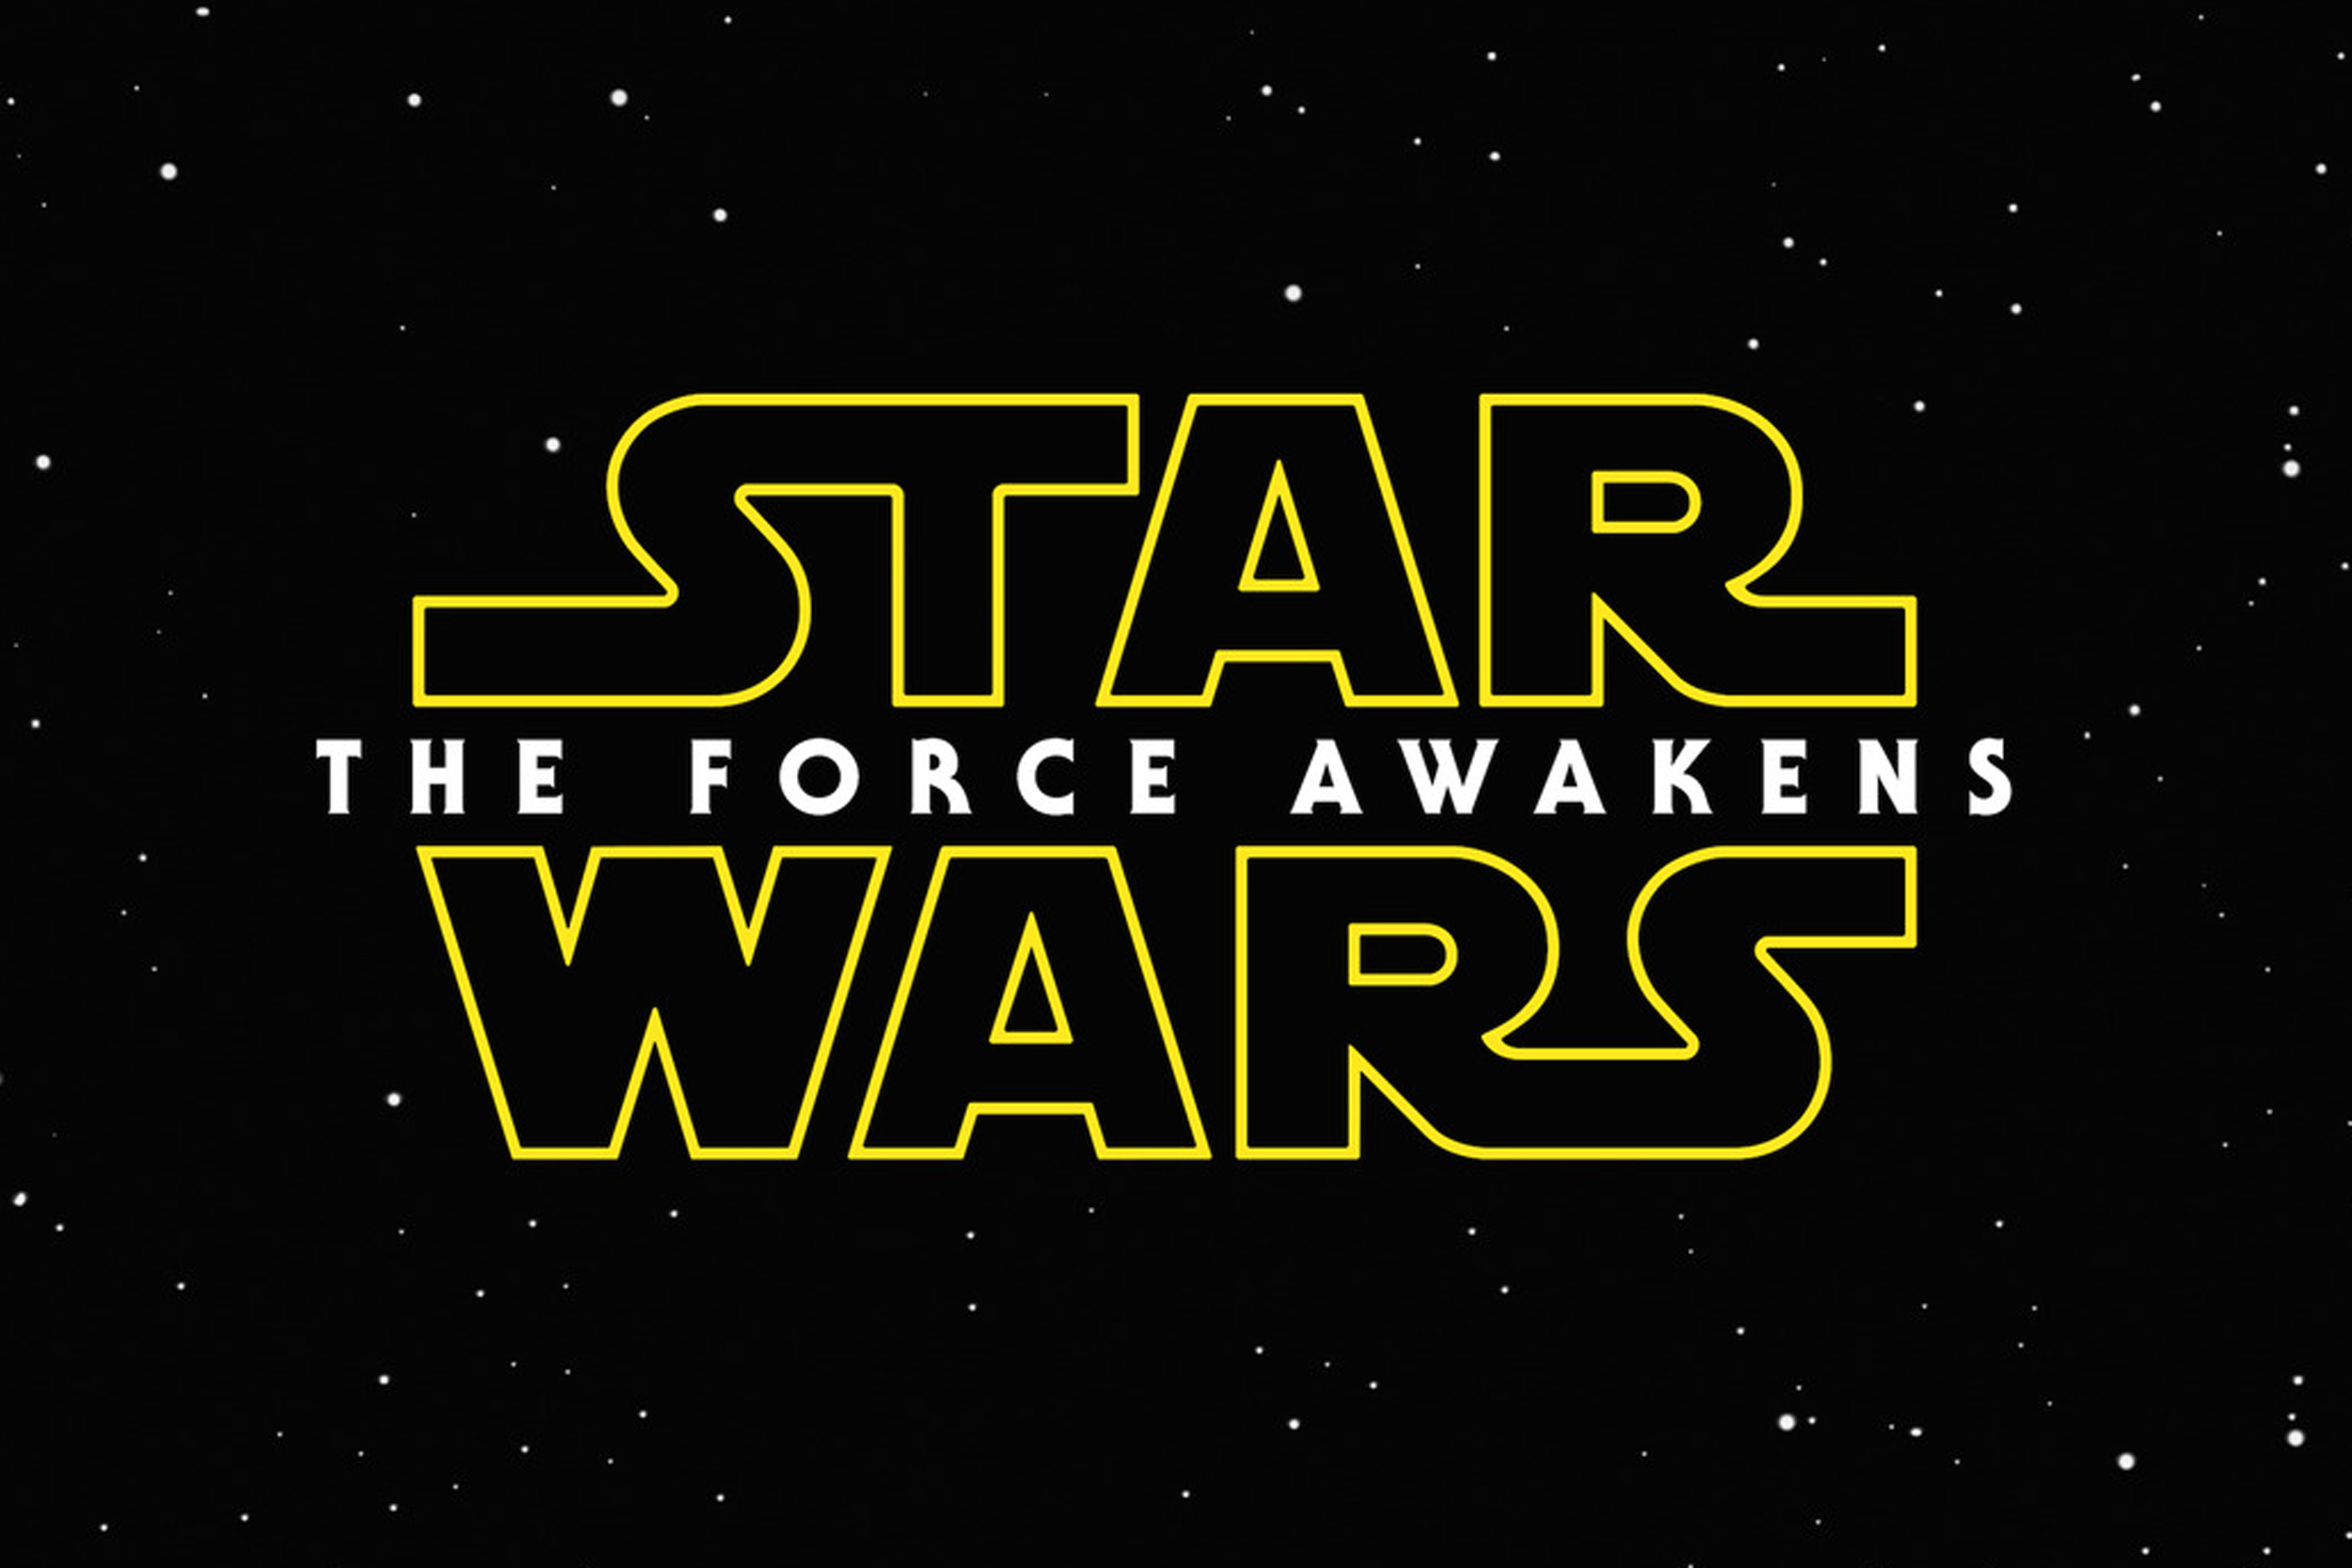 «Star Wars: The Force Awakens» — название 7 эпизода